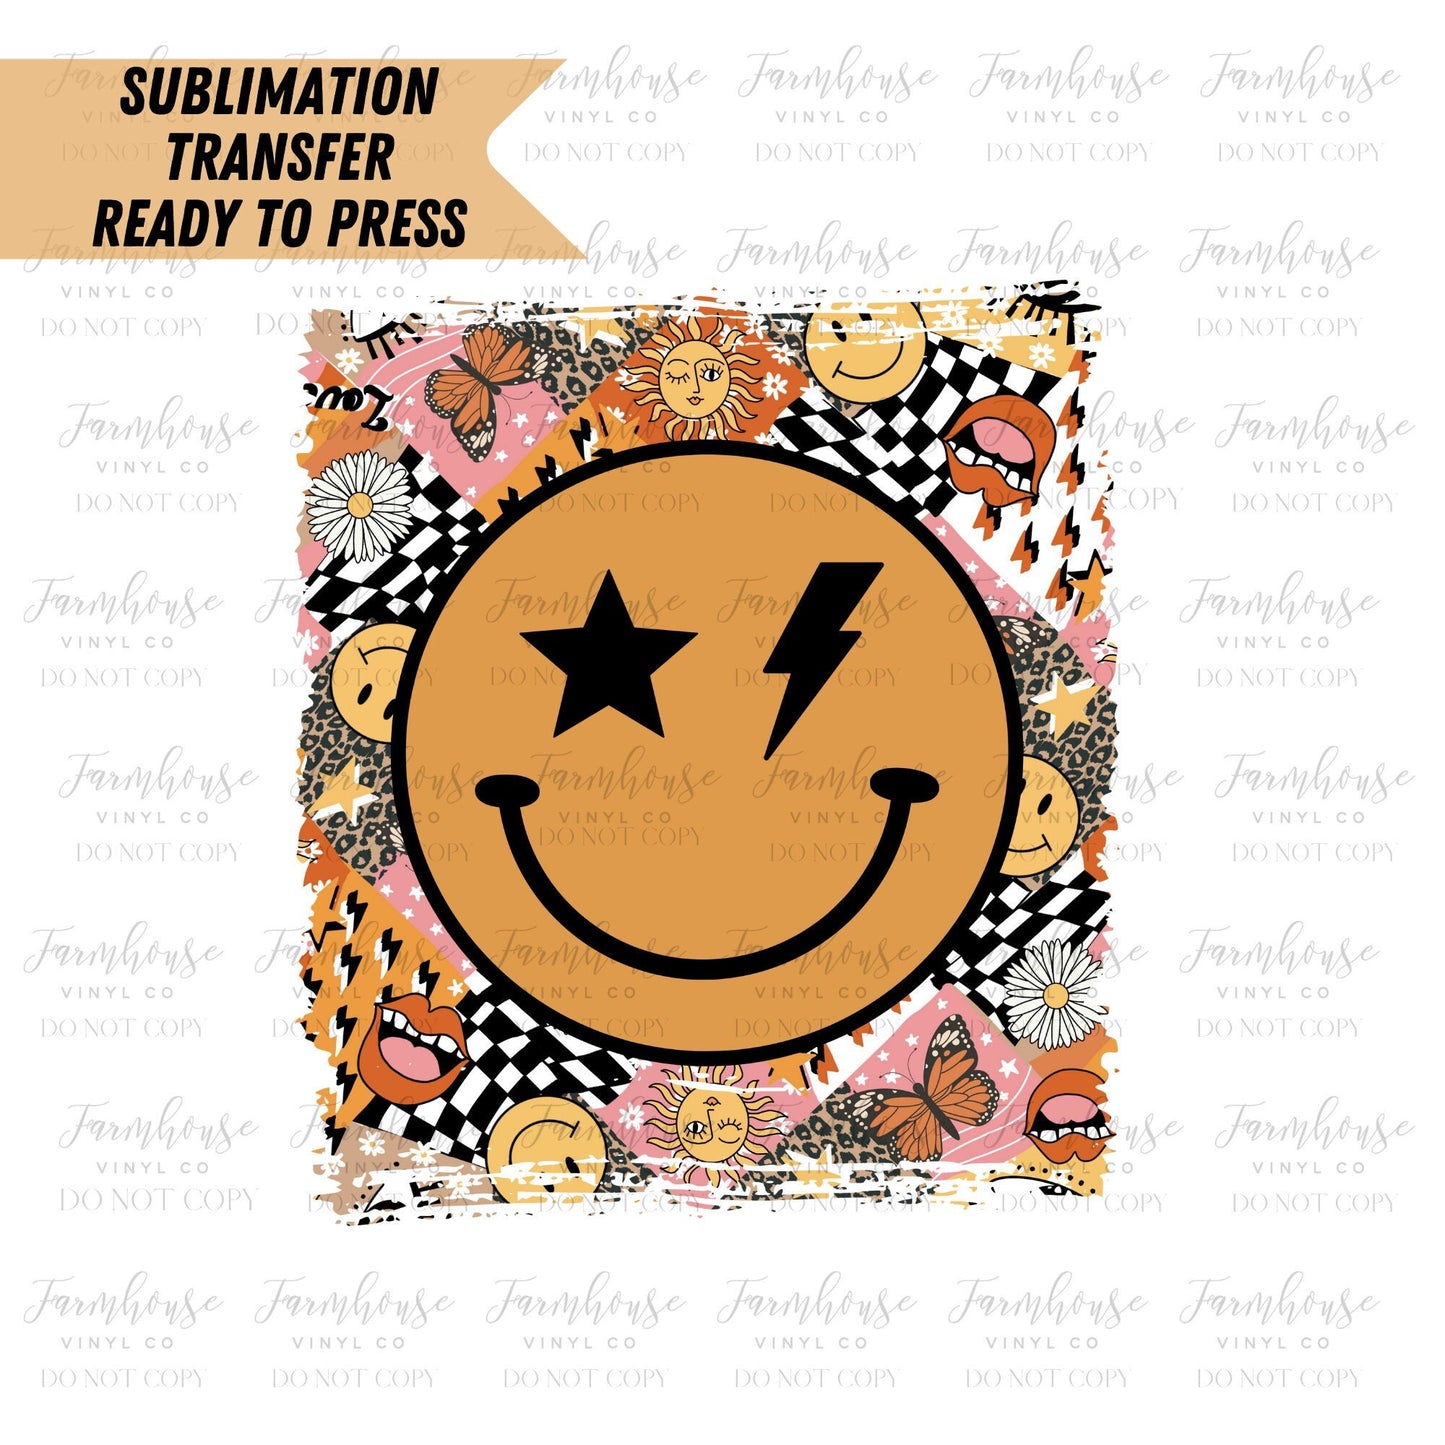 Grunge Smiley Face Grunge Ready to Press Sublimation Transfer - Farmhouse Vinyl Co